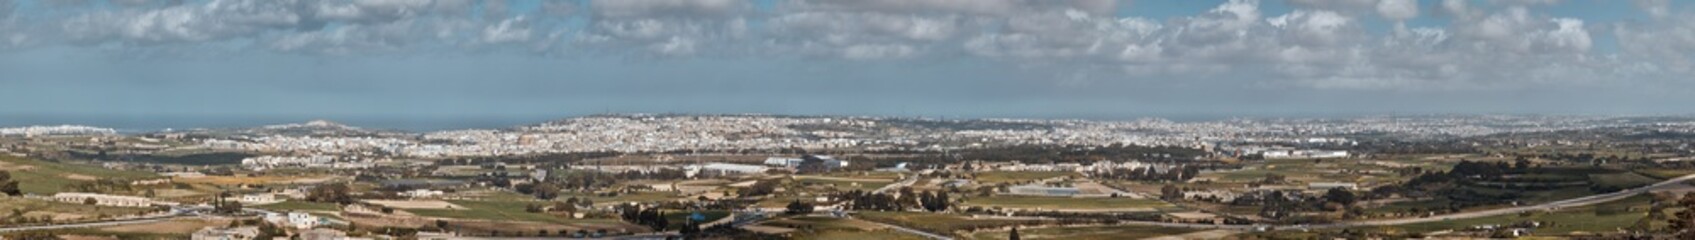 Malta panoramic from Mdina